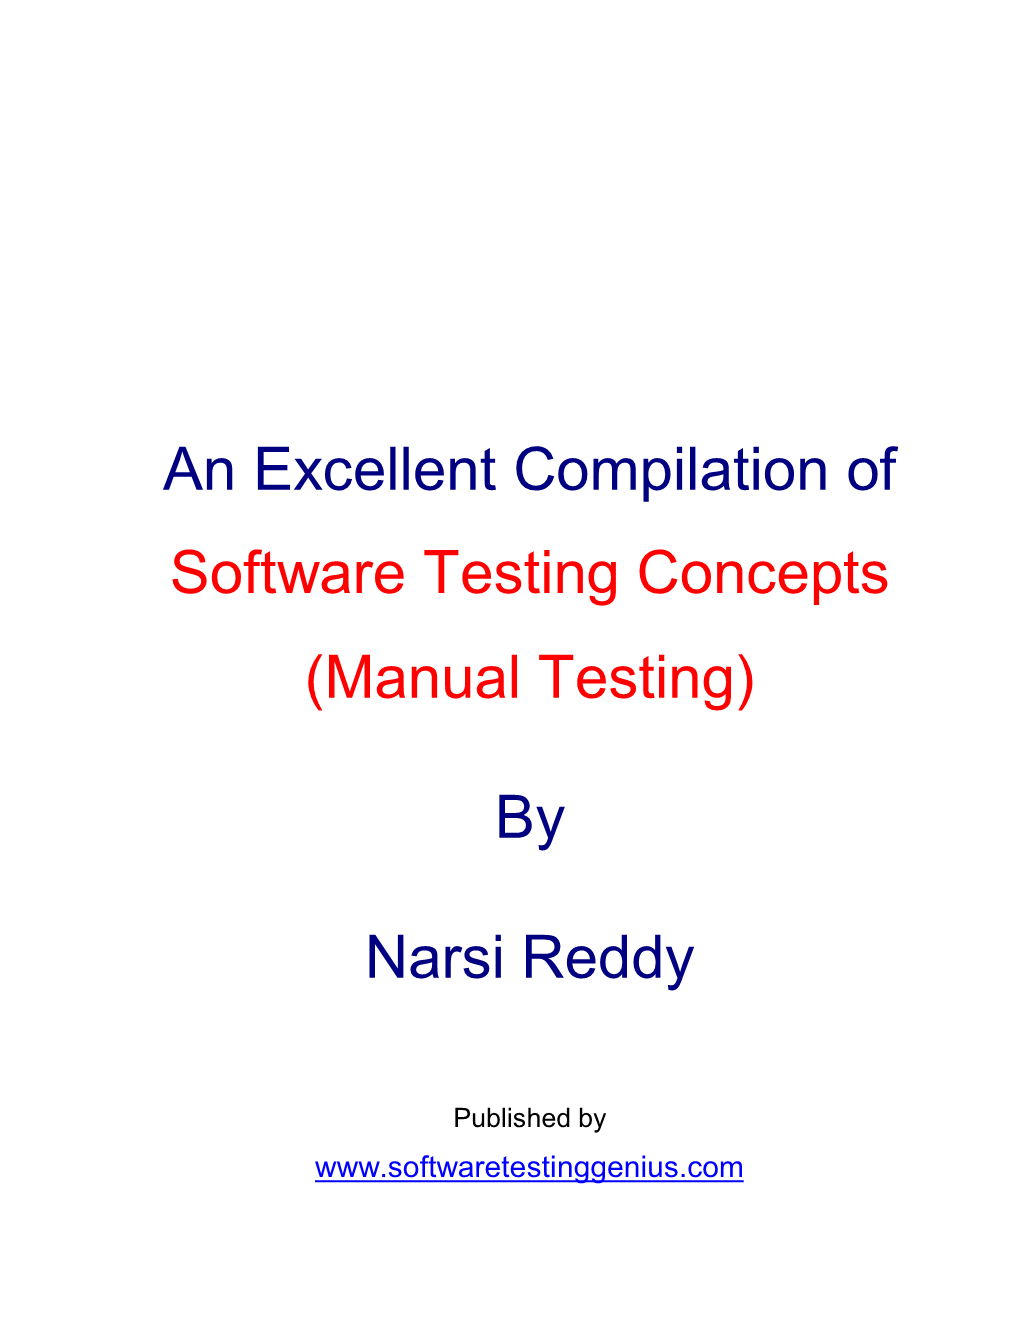 (Manual Testing) by Narsi Reddy